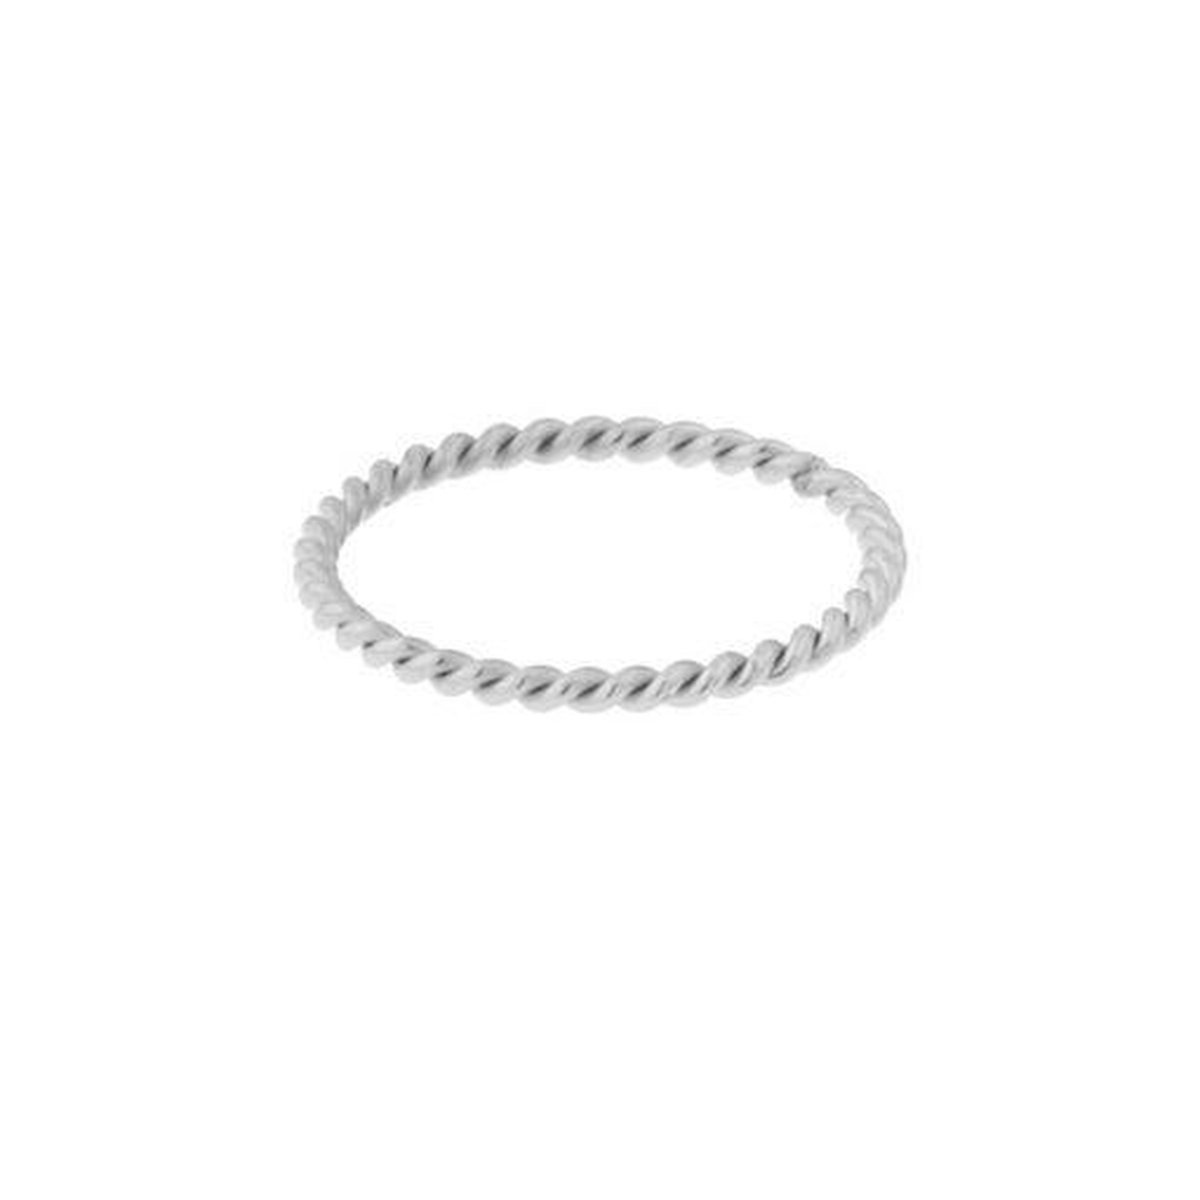 Ring basic gedraaid - Maat 18 - Zilver - Stainless steel (verkleurt niet)